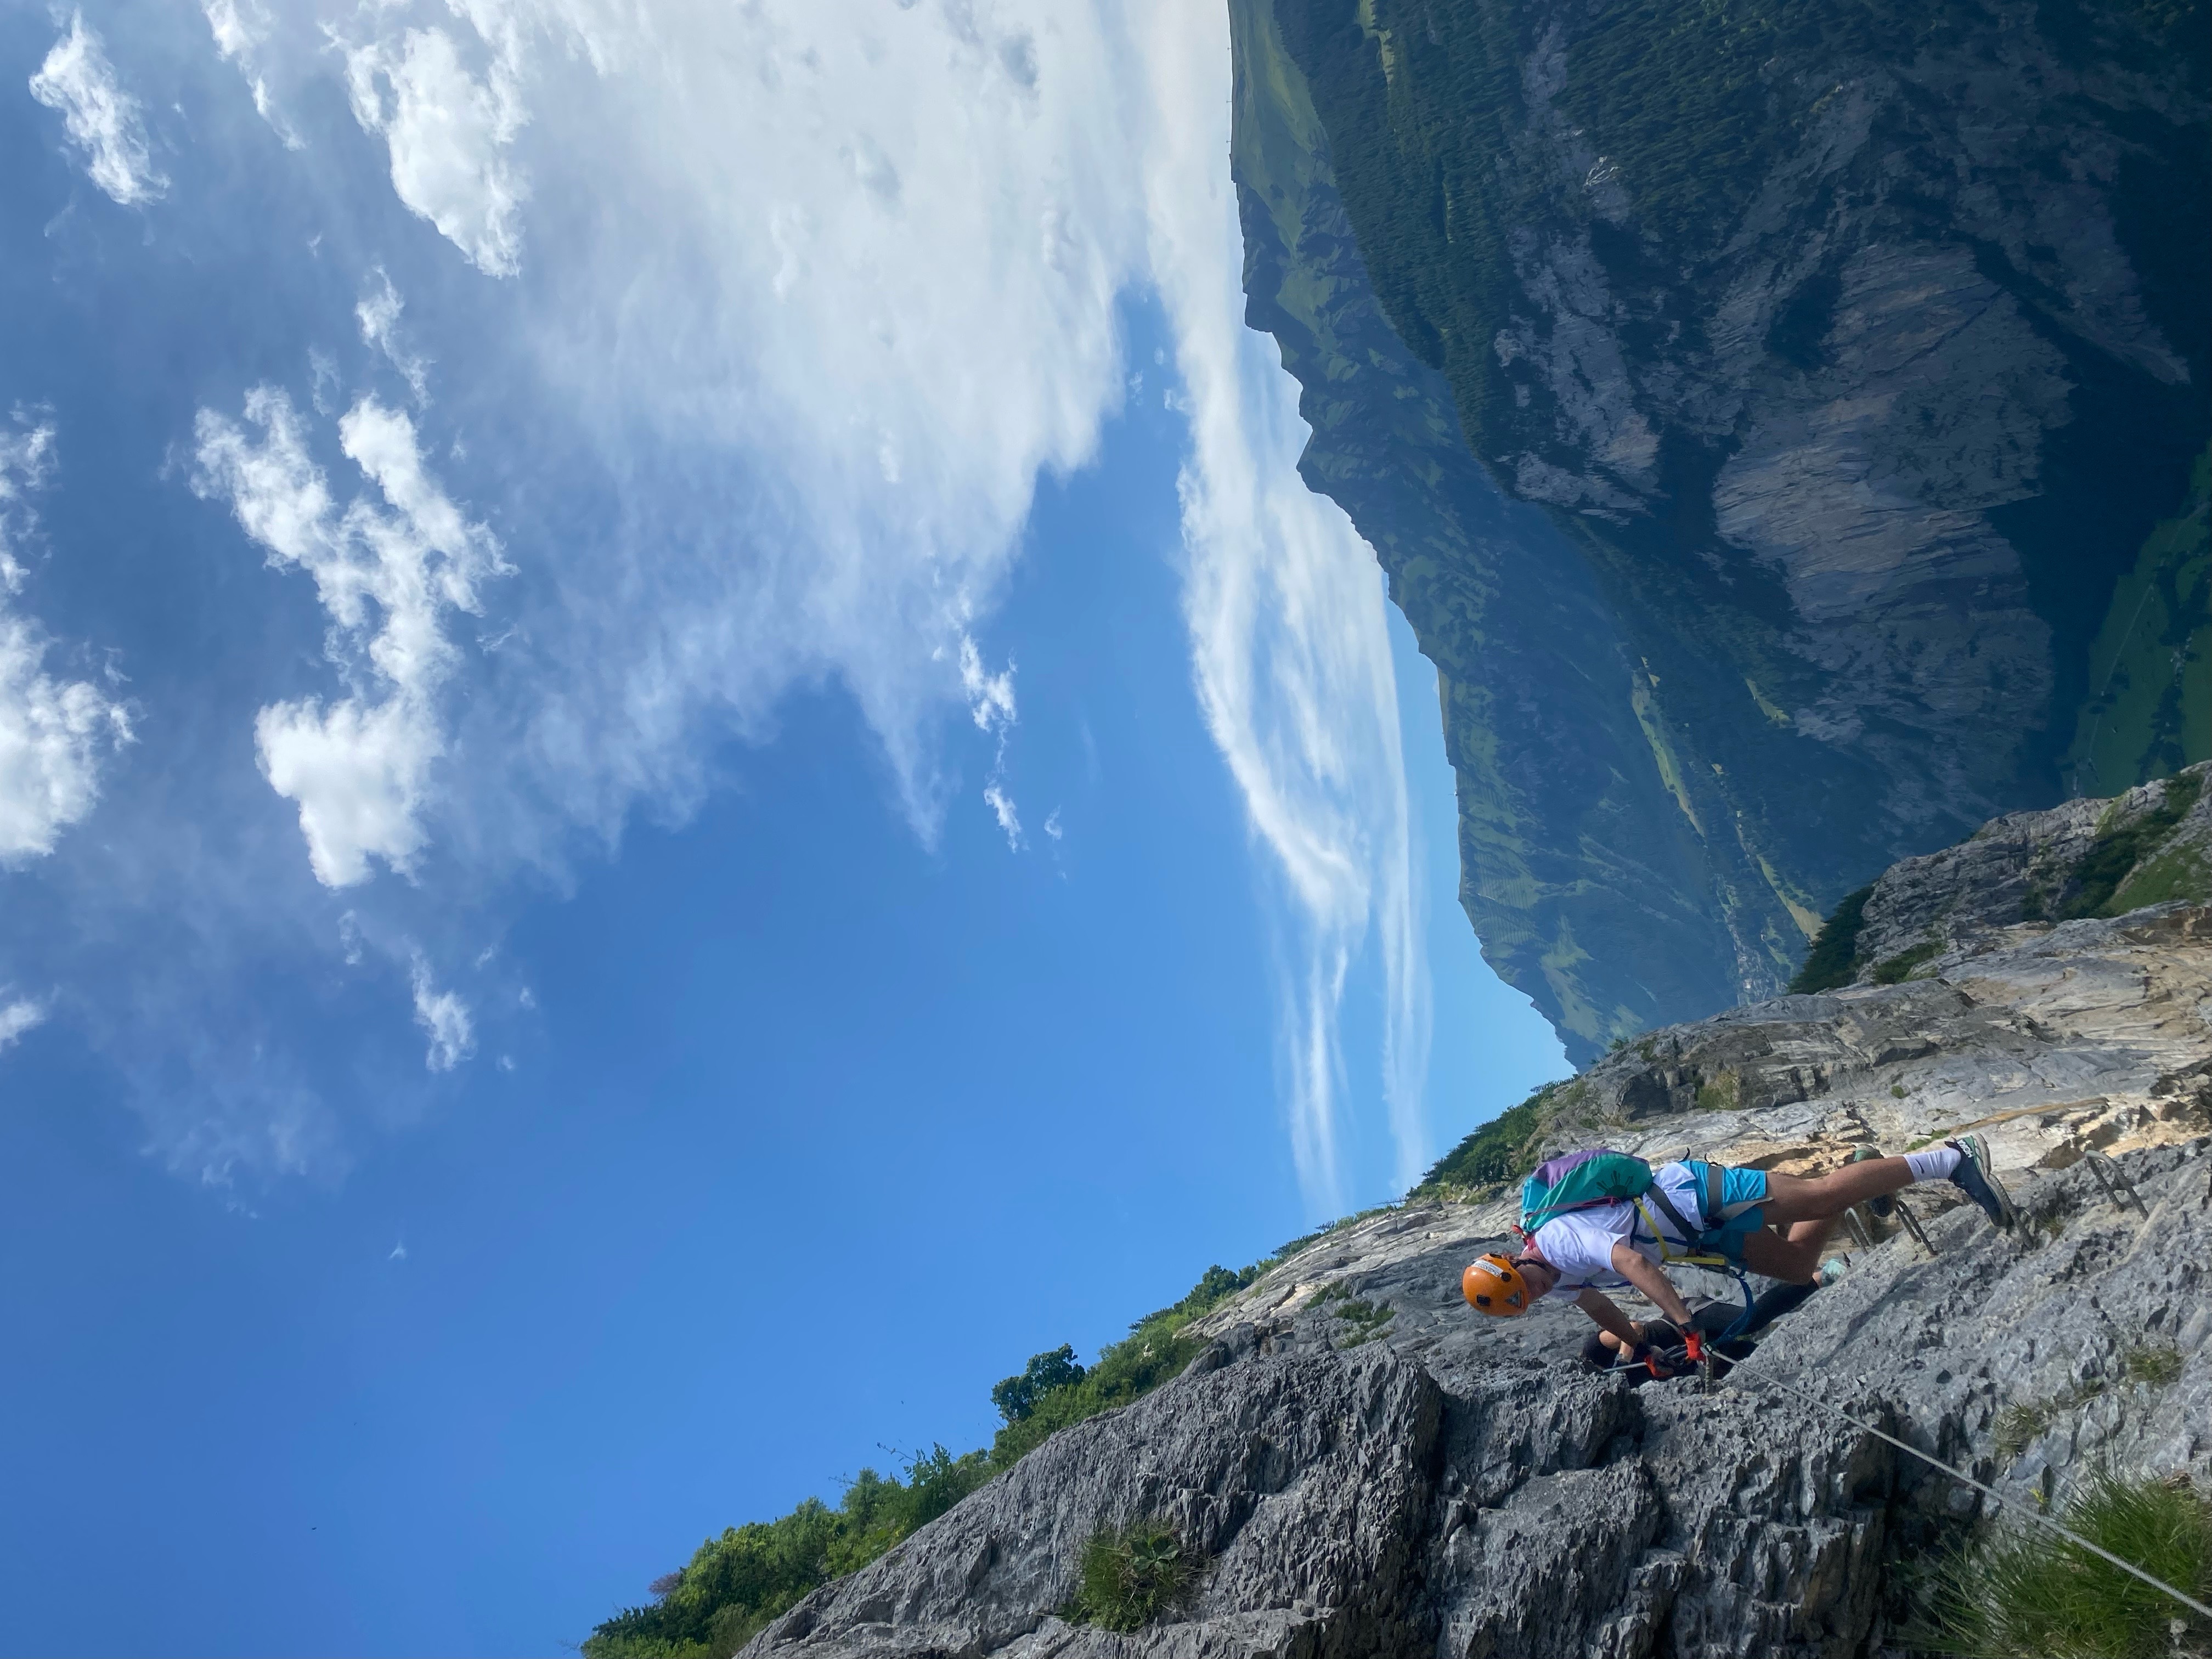  Luke Johnson climbed 2,000-foot cliffs in Switzerland. 